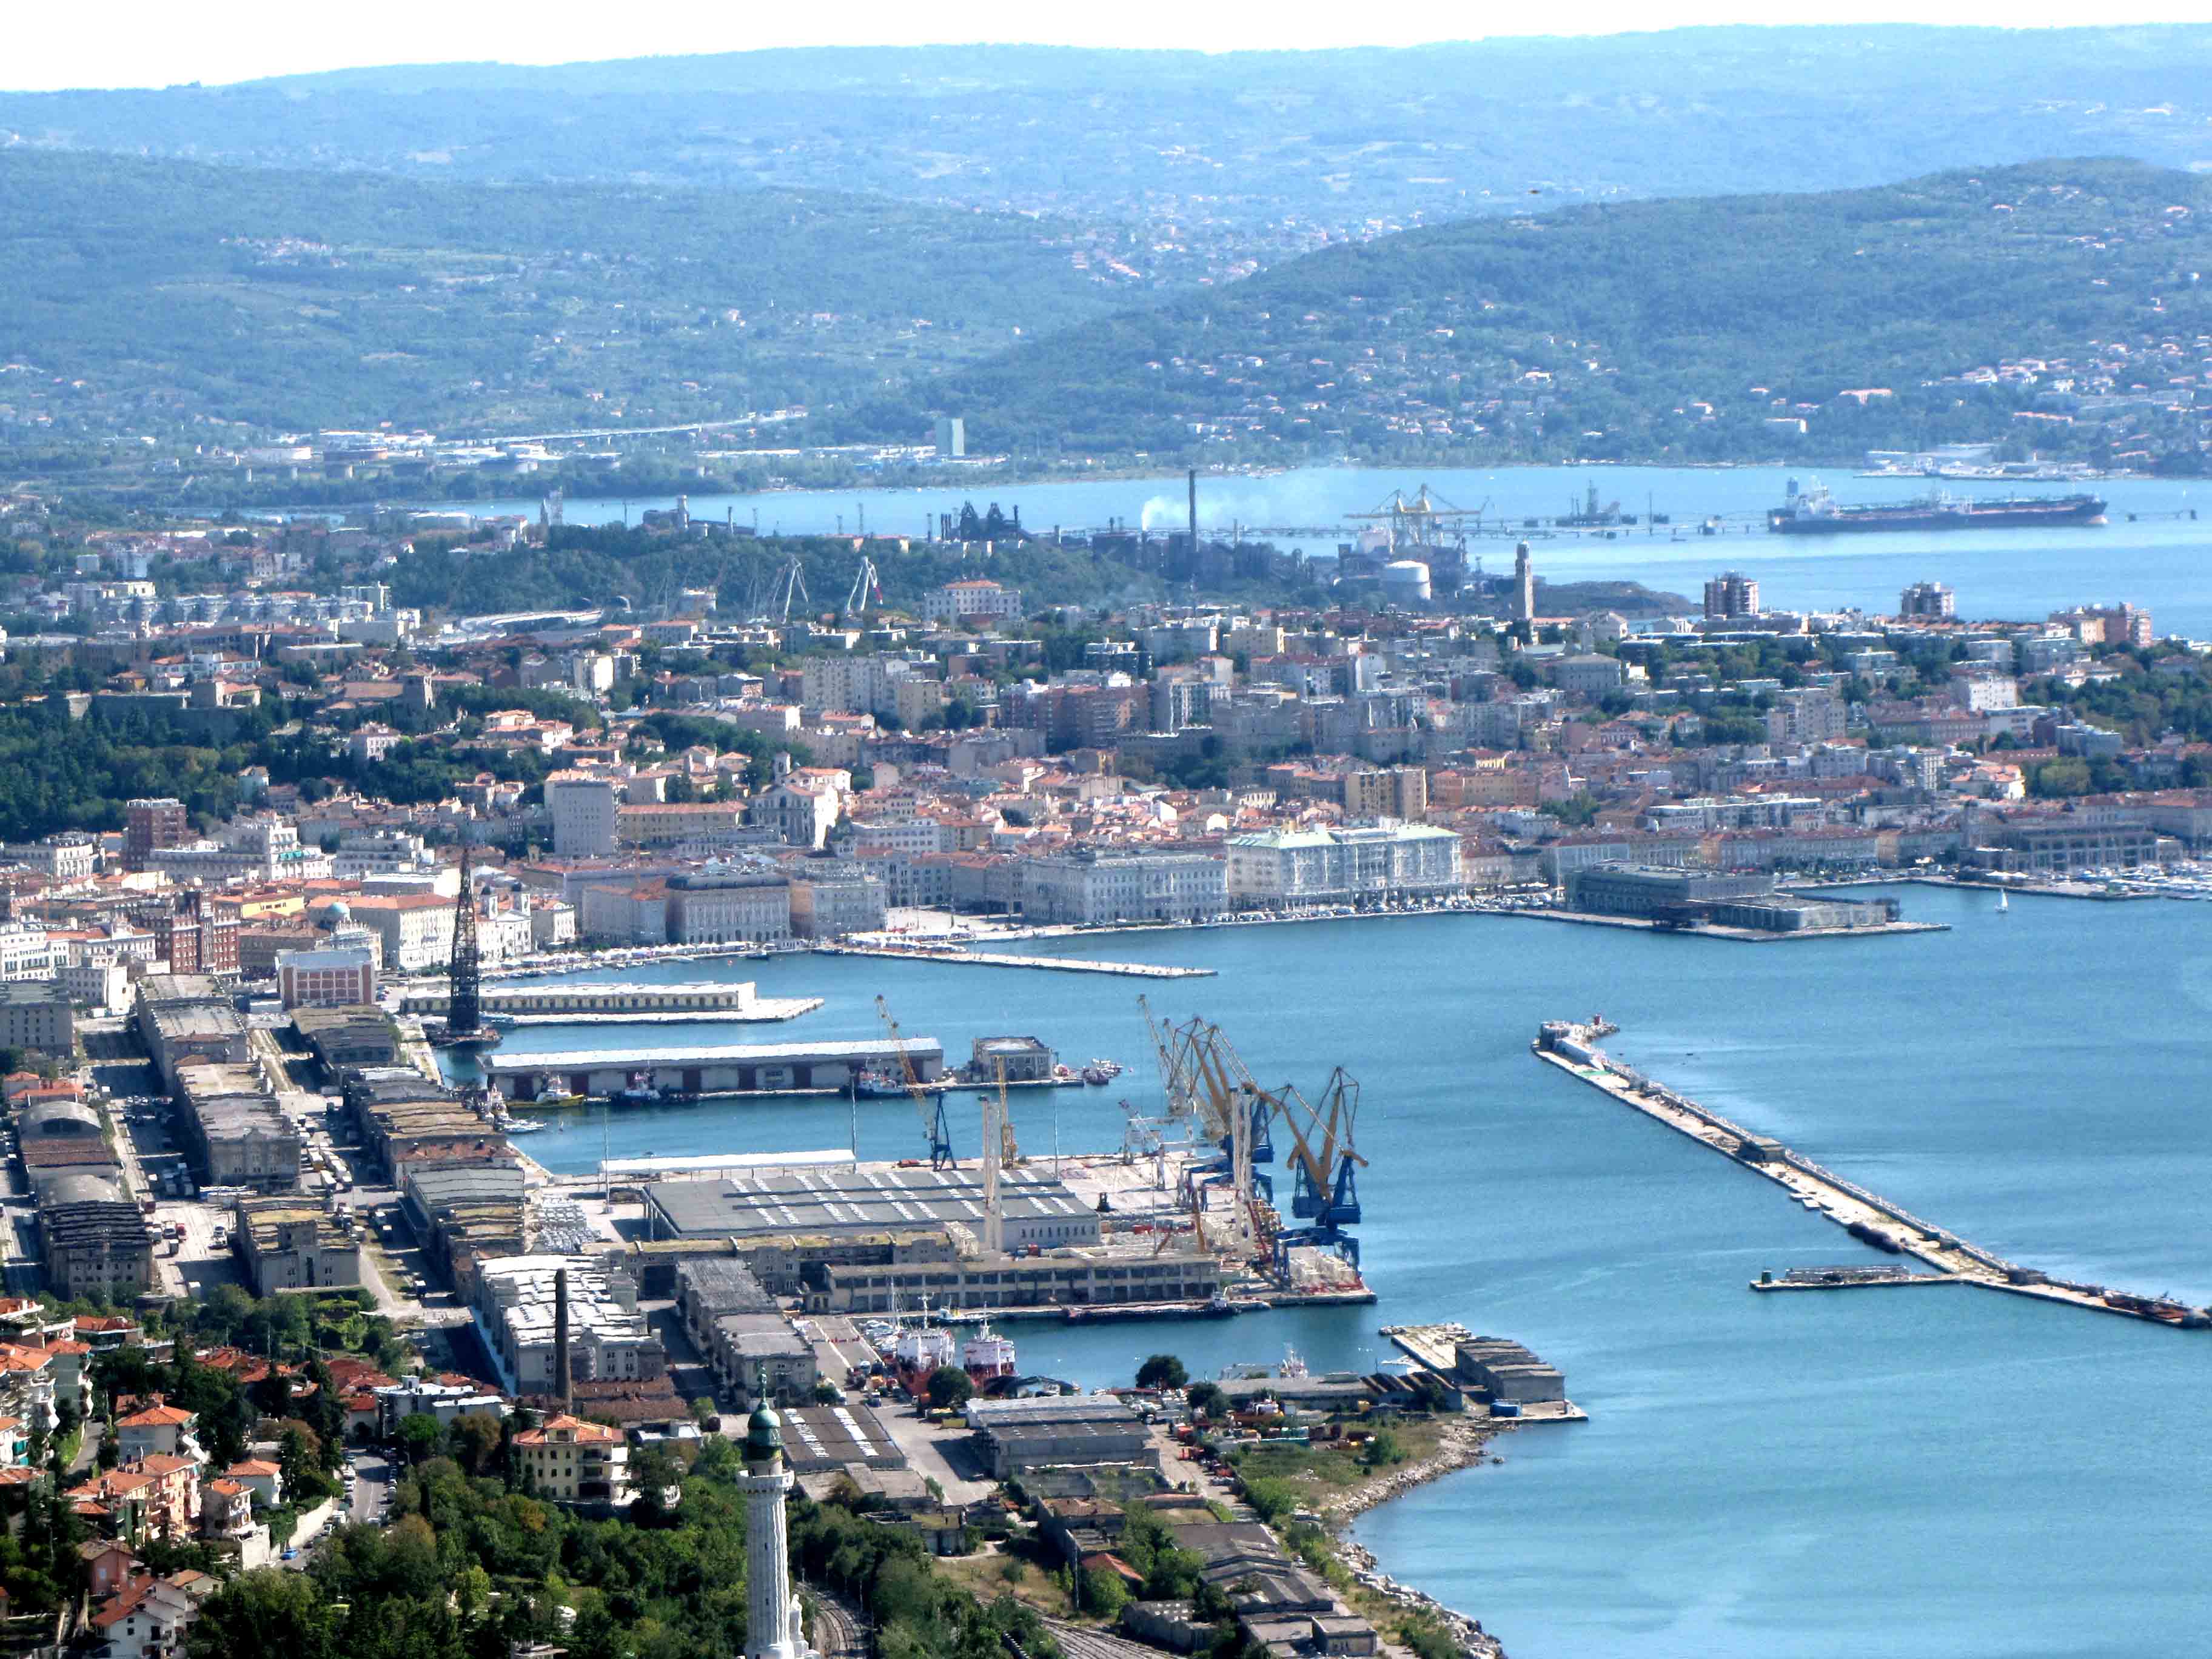 Northern Free Port of Trieste, a strategic sector of the international Free Port of Trieste.